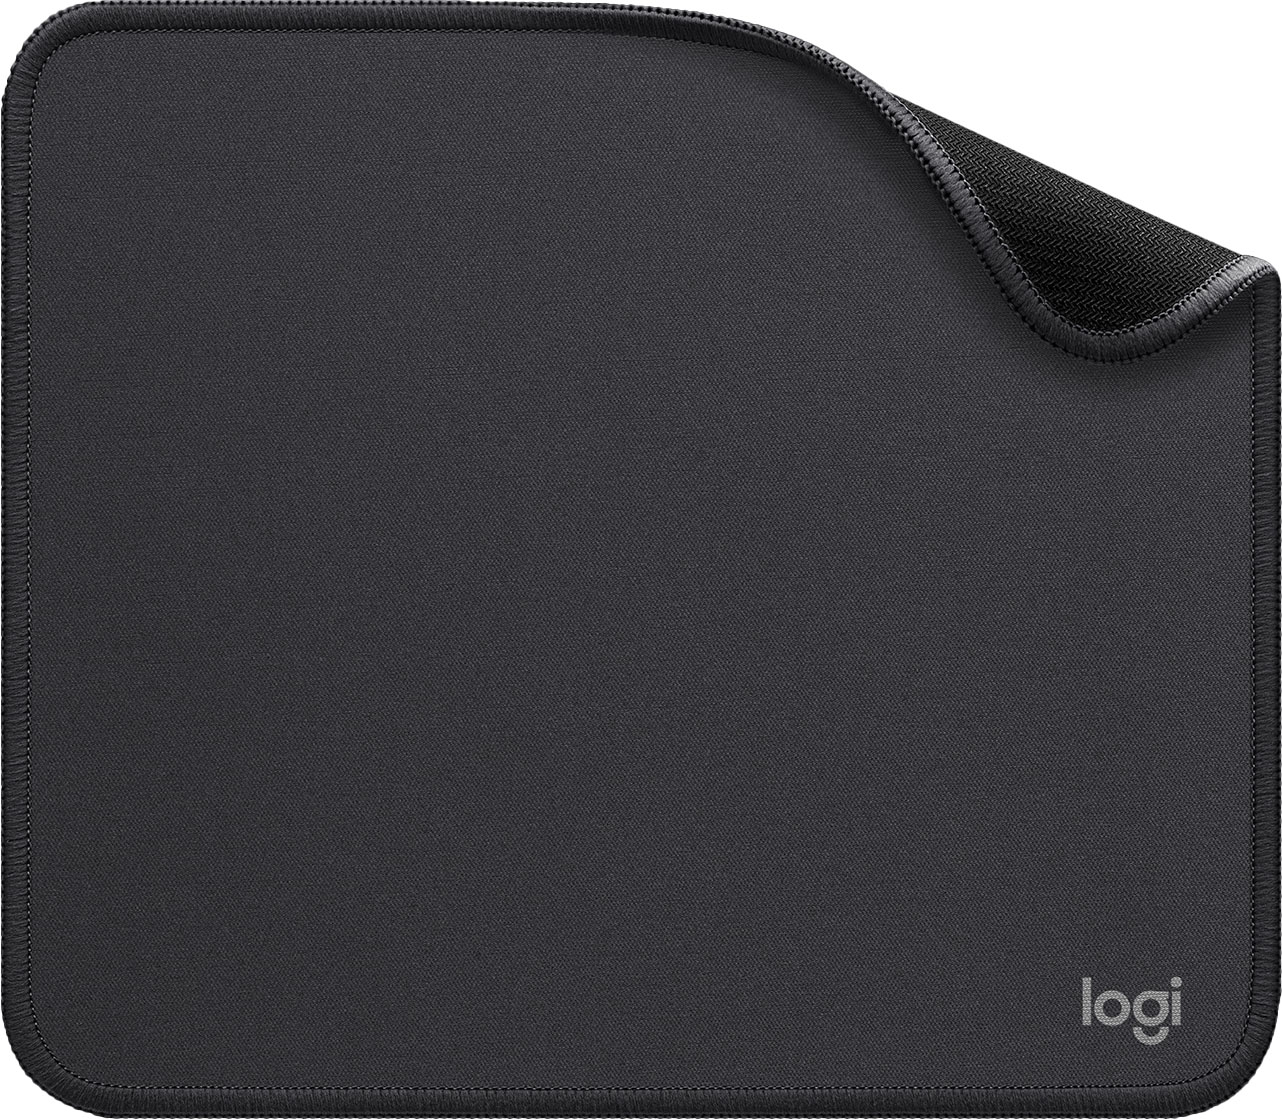 Logitech Mouse Pad - Studio Series Graphite